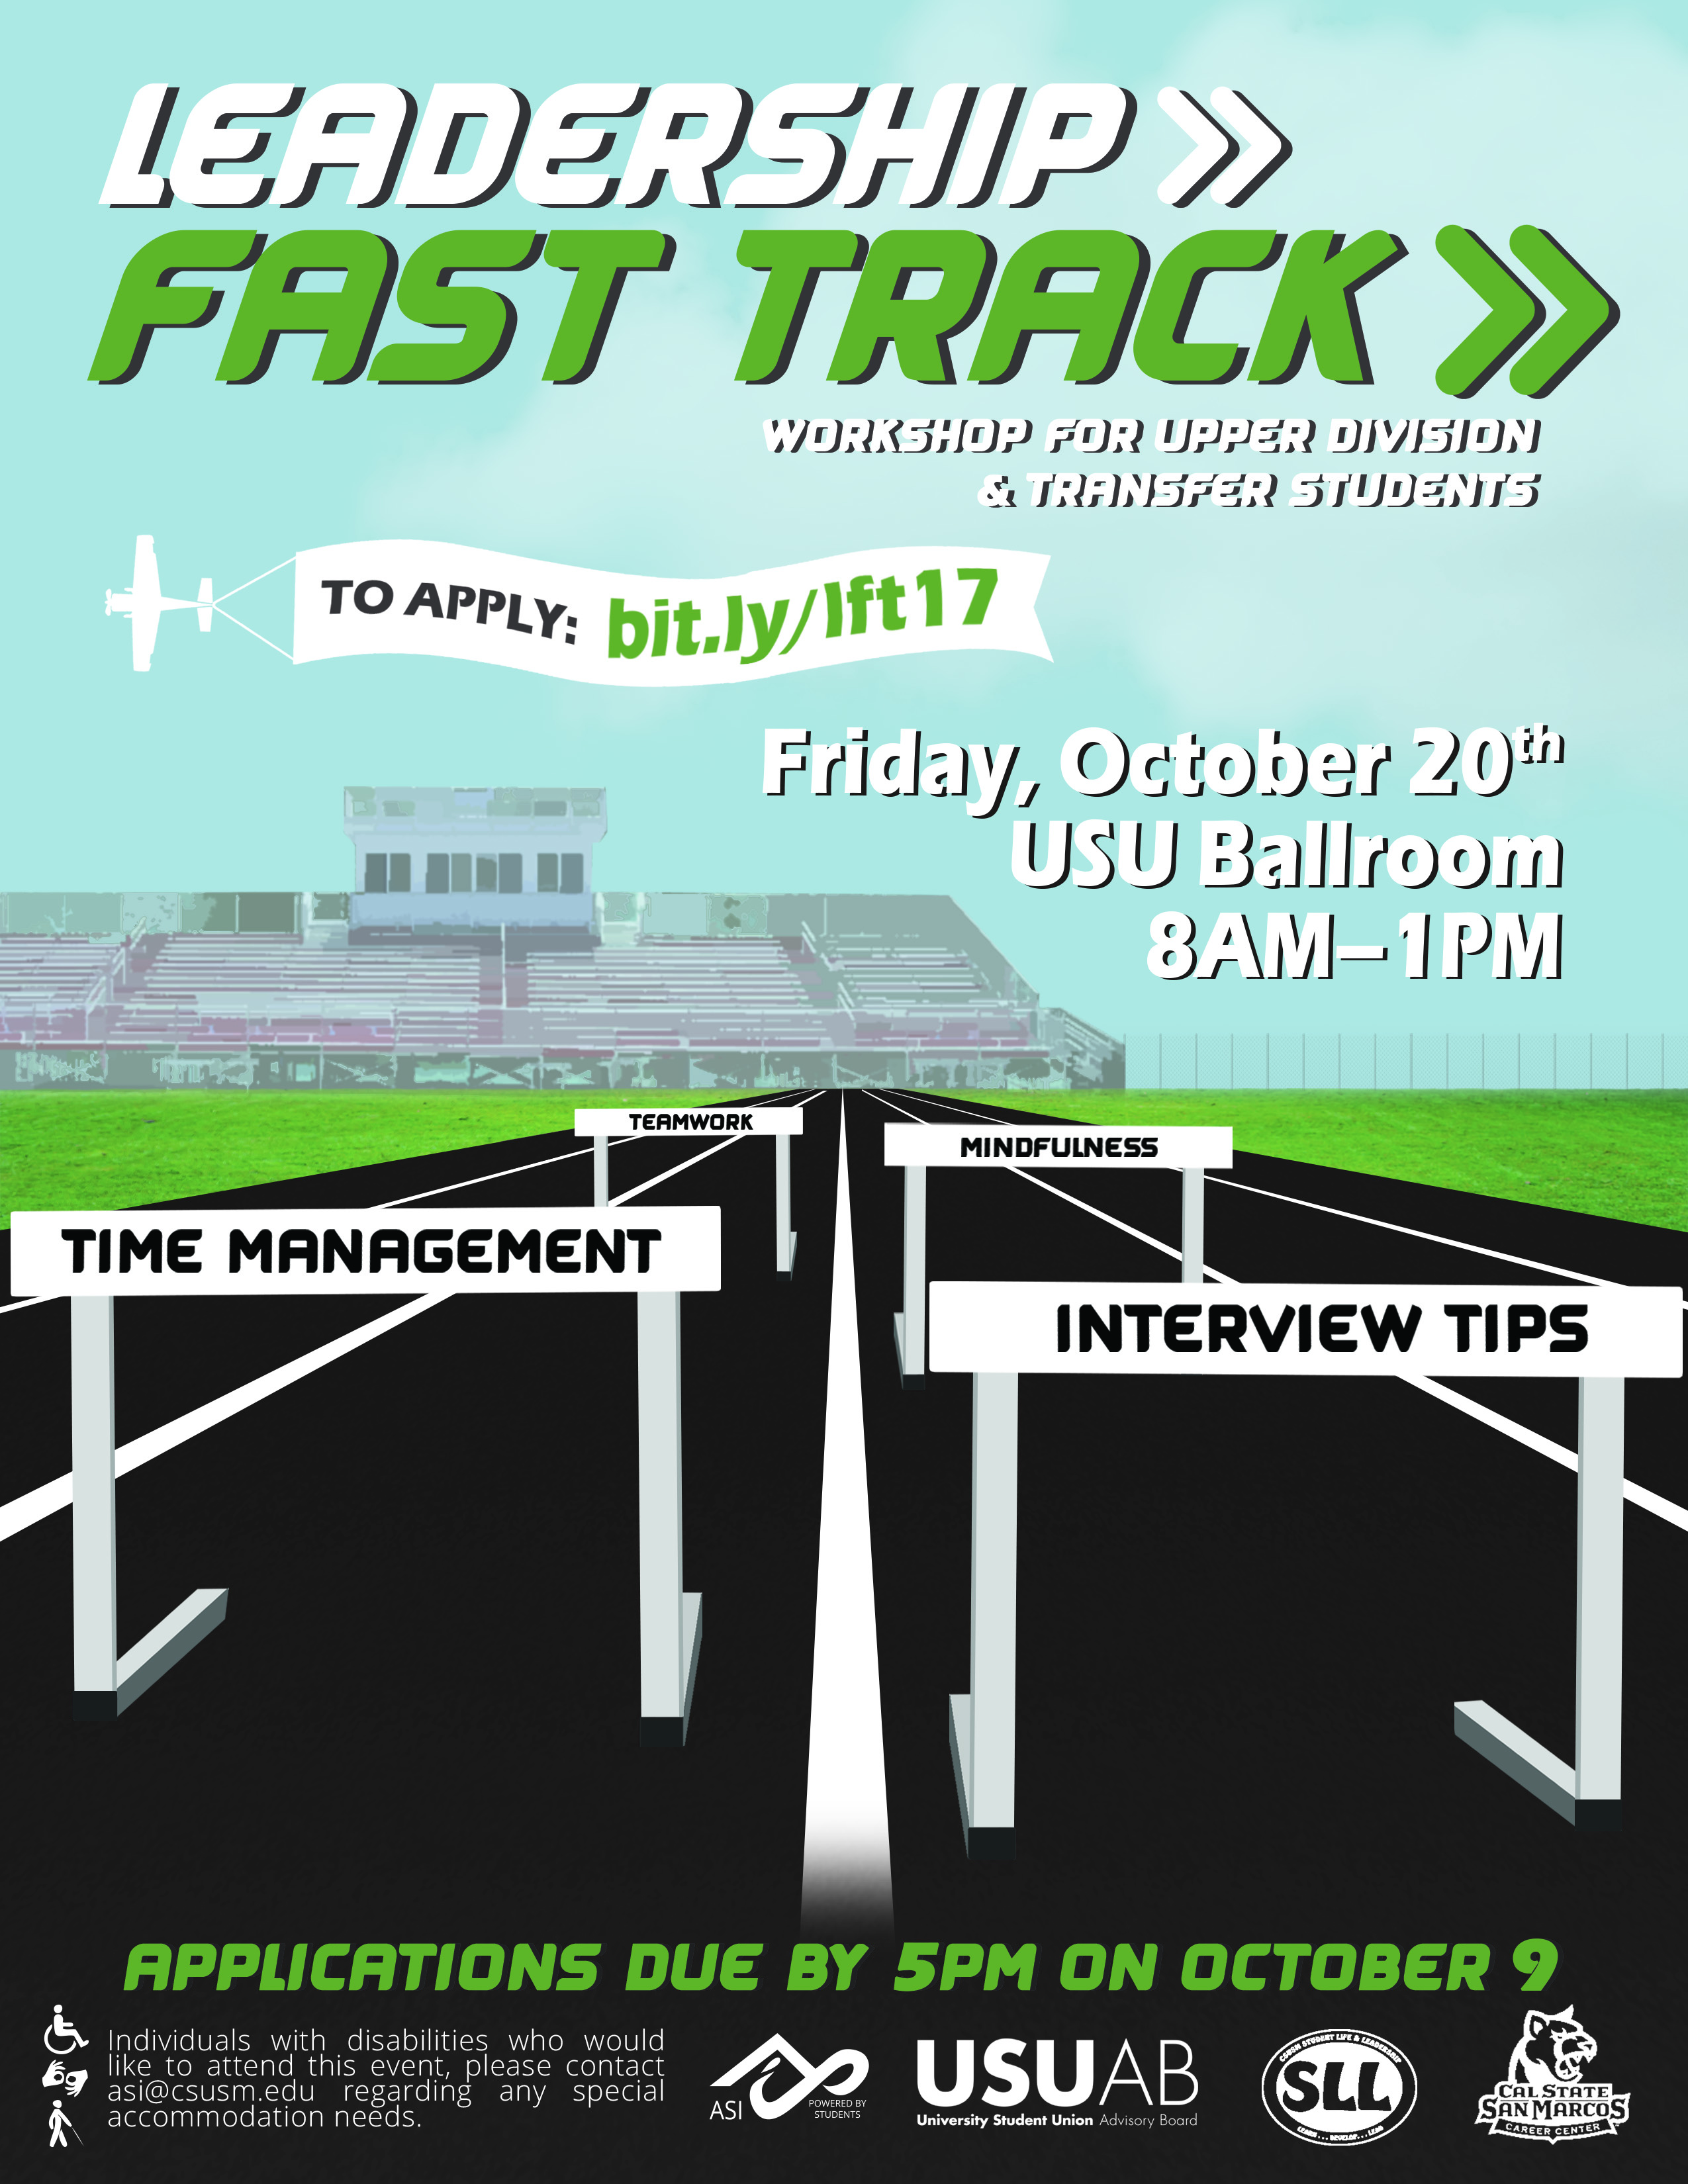 Leadership Fast track flyer